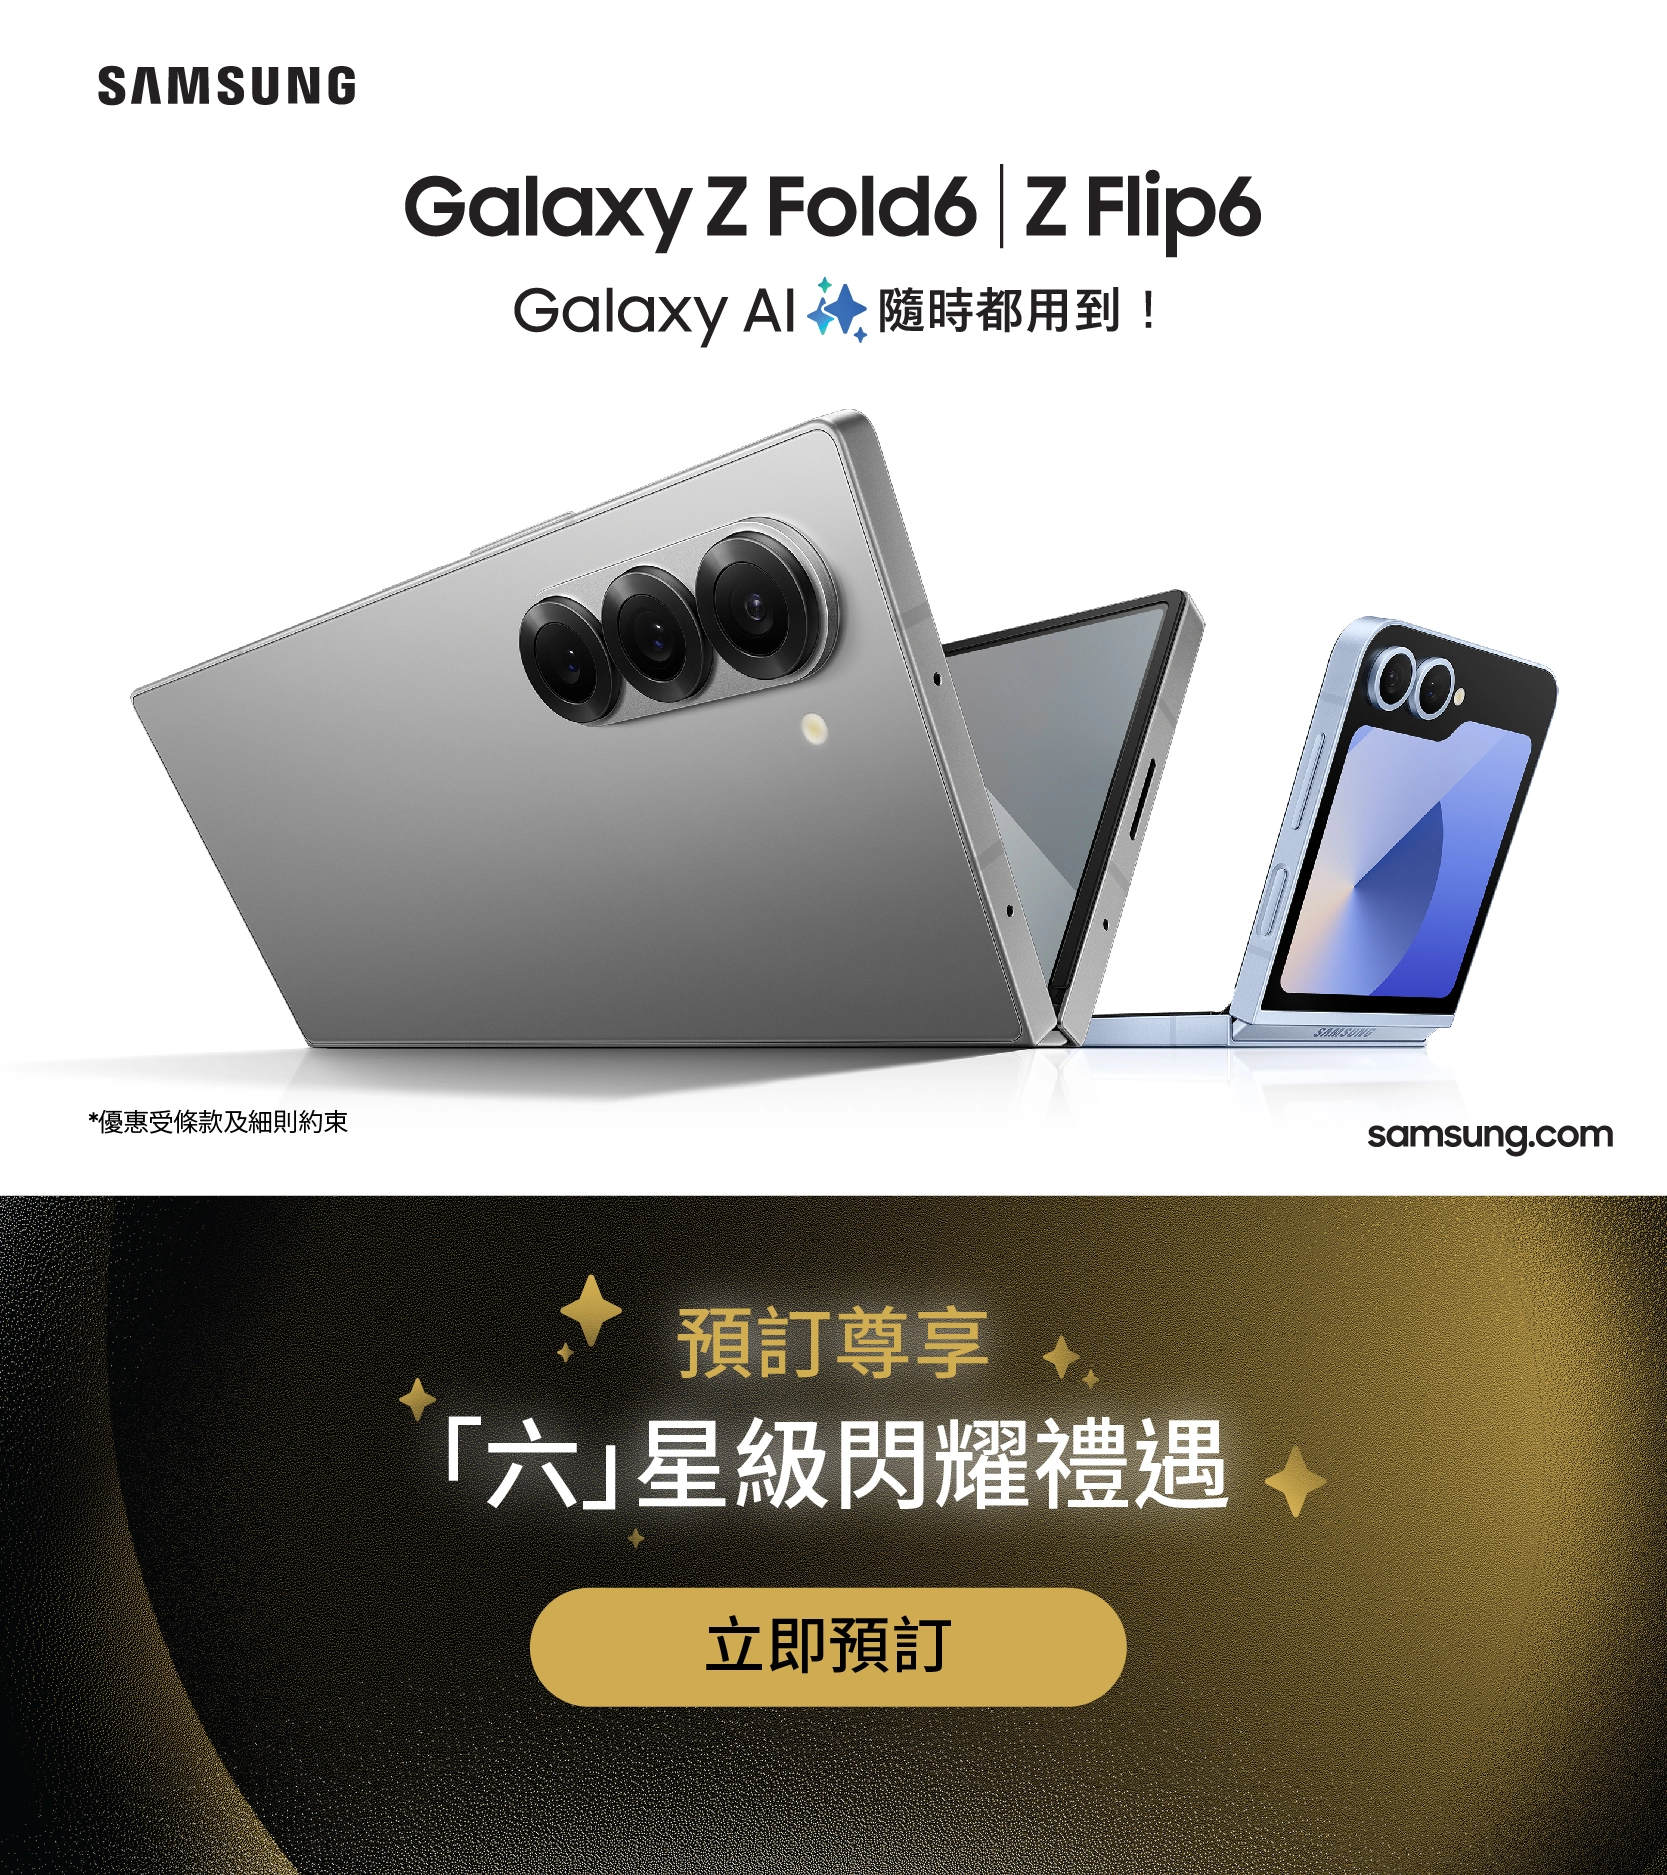 Samsung Galaxy Z Fold5 | Z Flip5